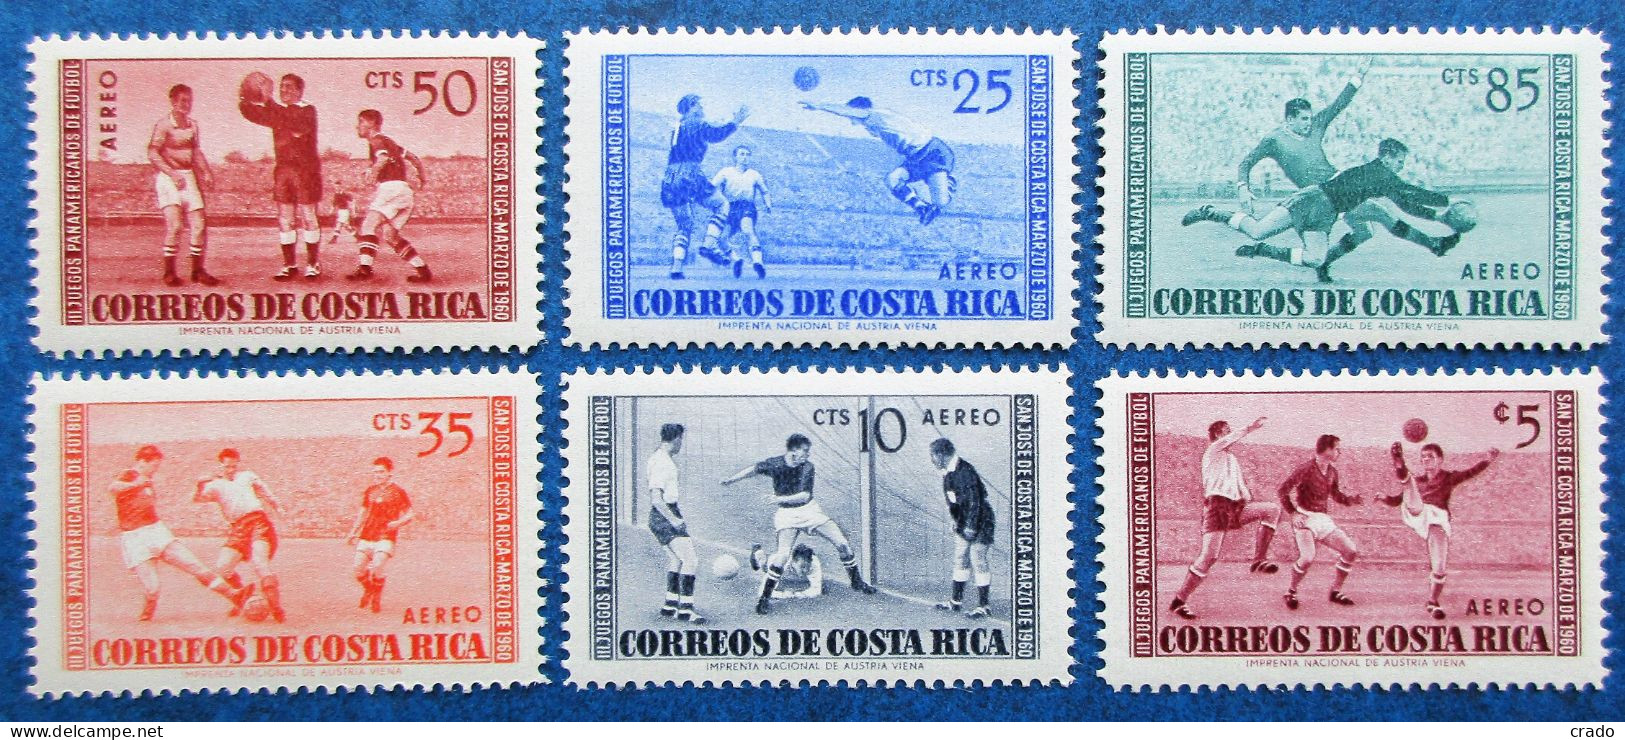 Vends Timbres Du Costa-Rica De 1960 Sur Le Football - Costa Rica